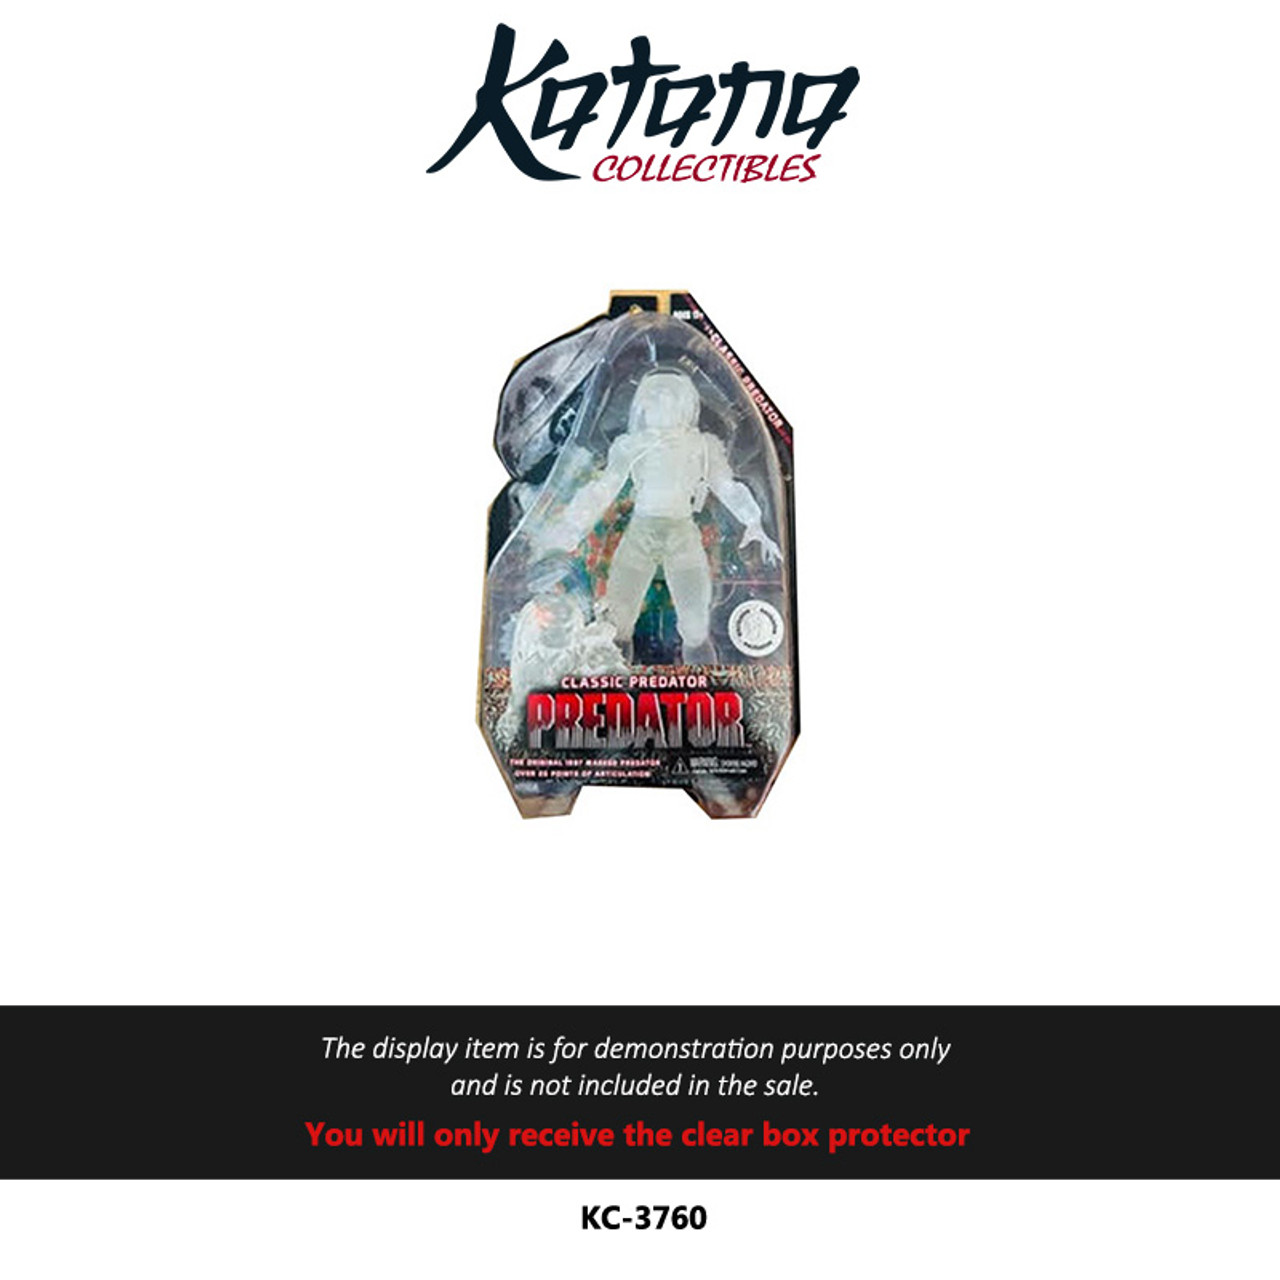 Katana Collectibles Protector For NECA Classic Predator